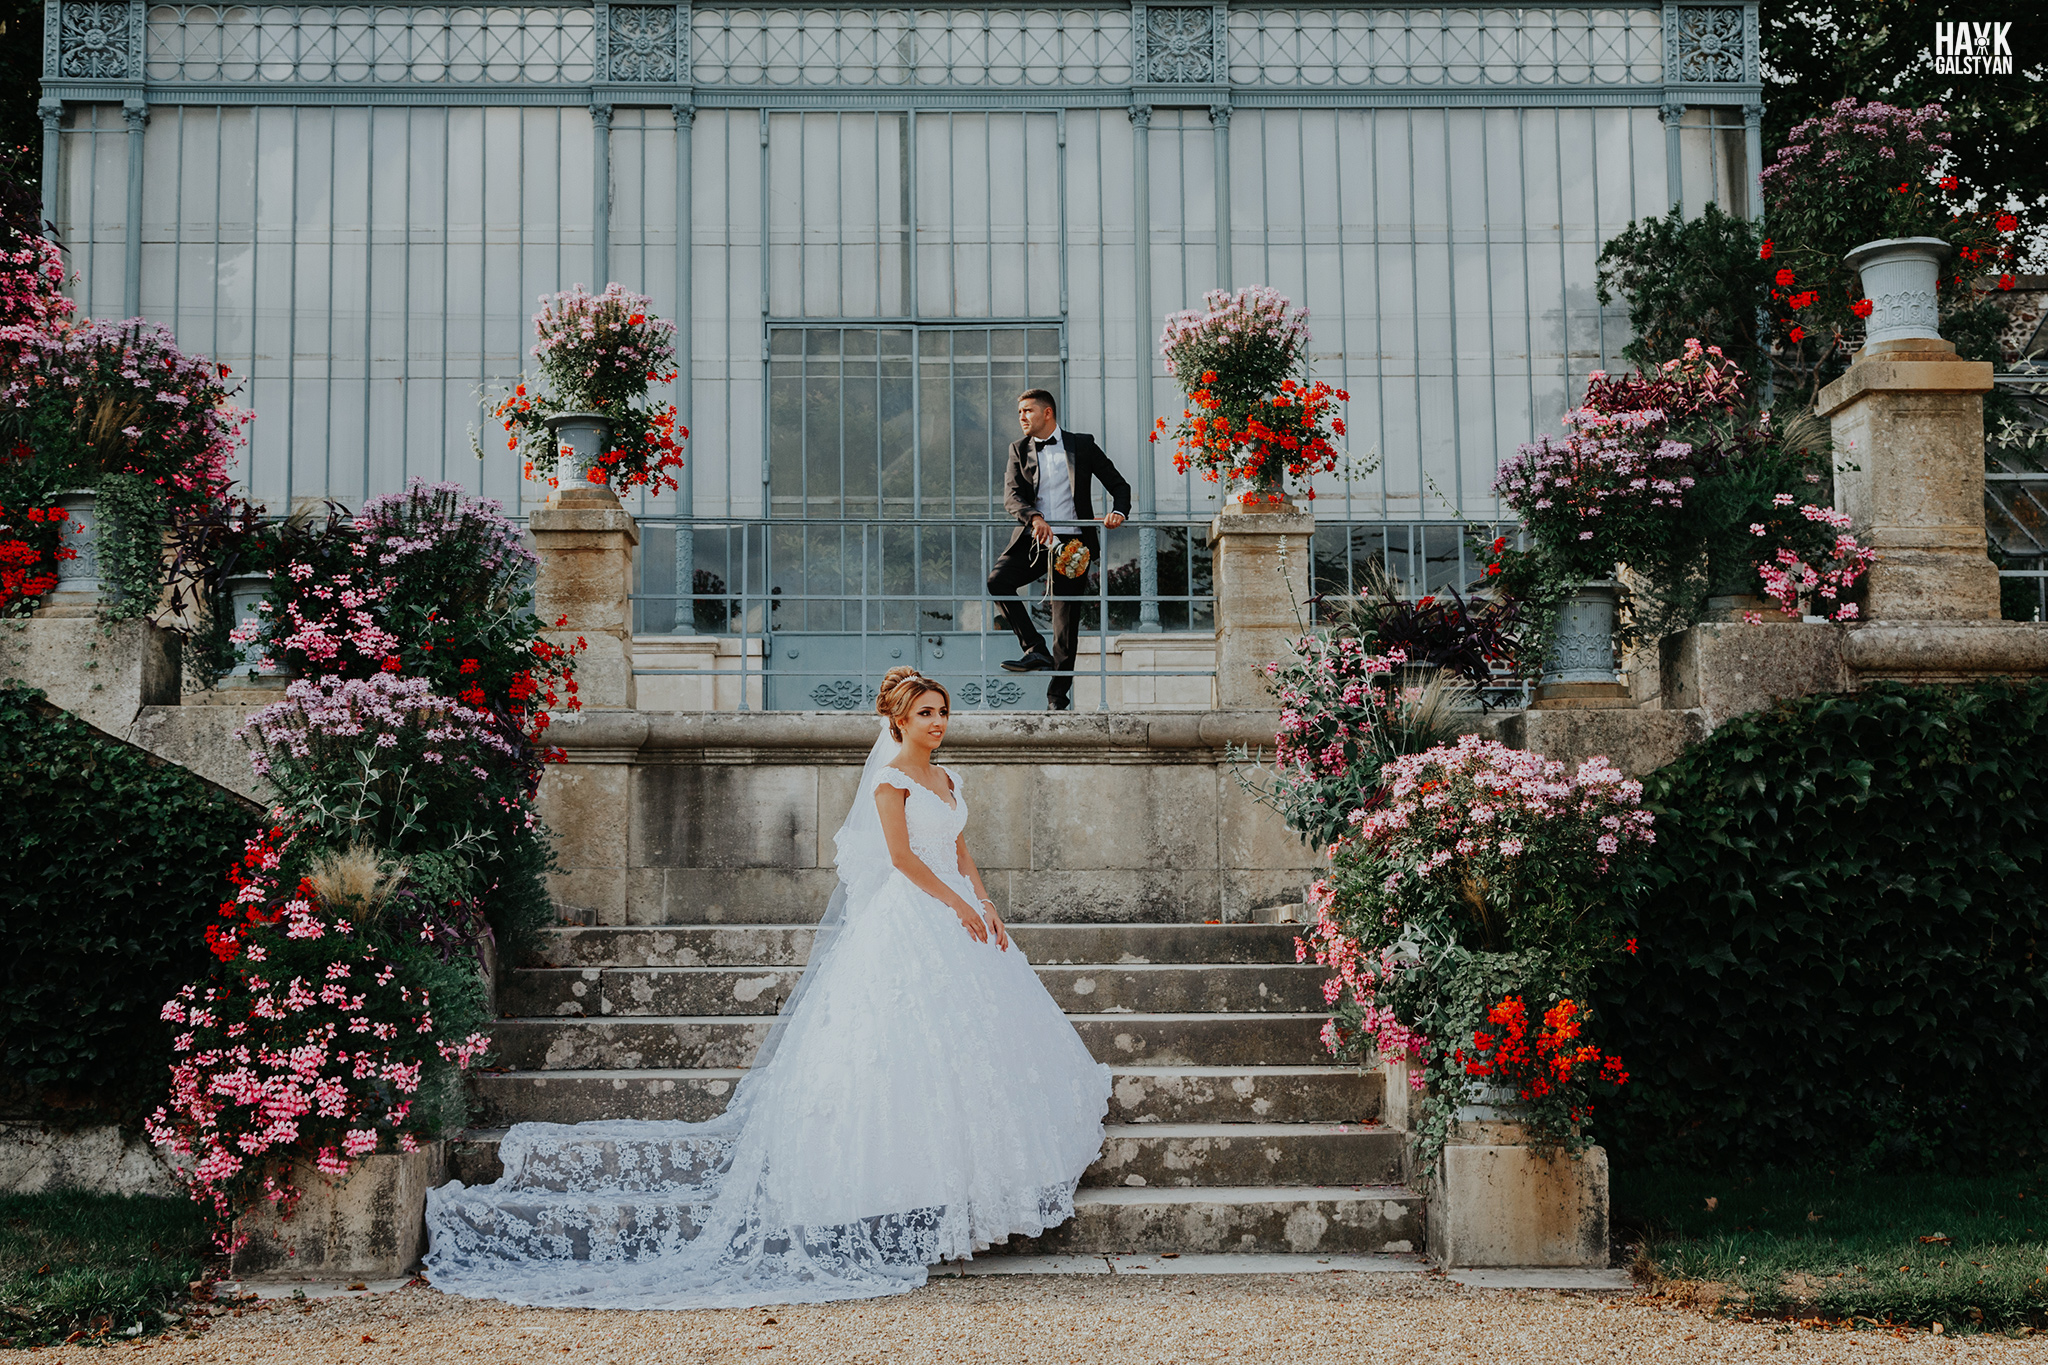 Bride and Groom in Paris by photographer Hayk Galstyan